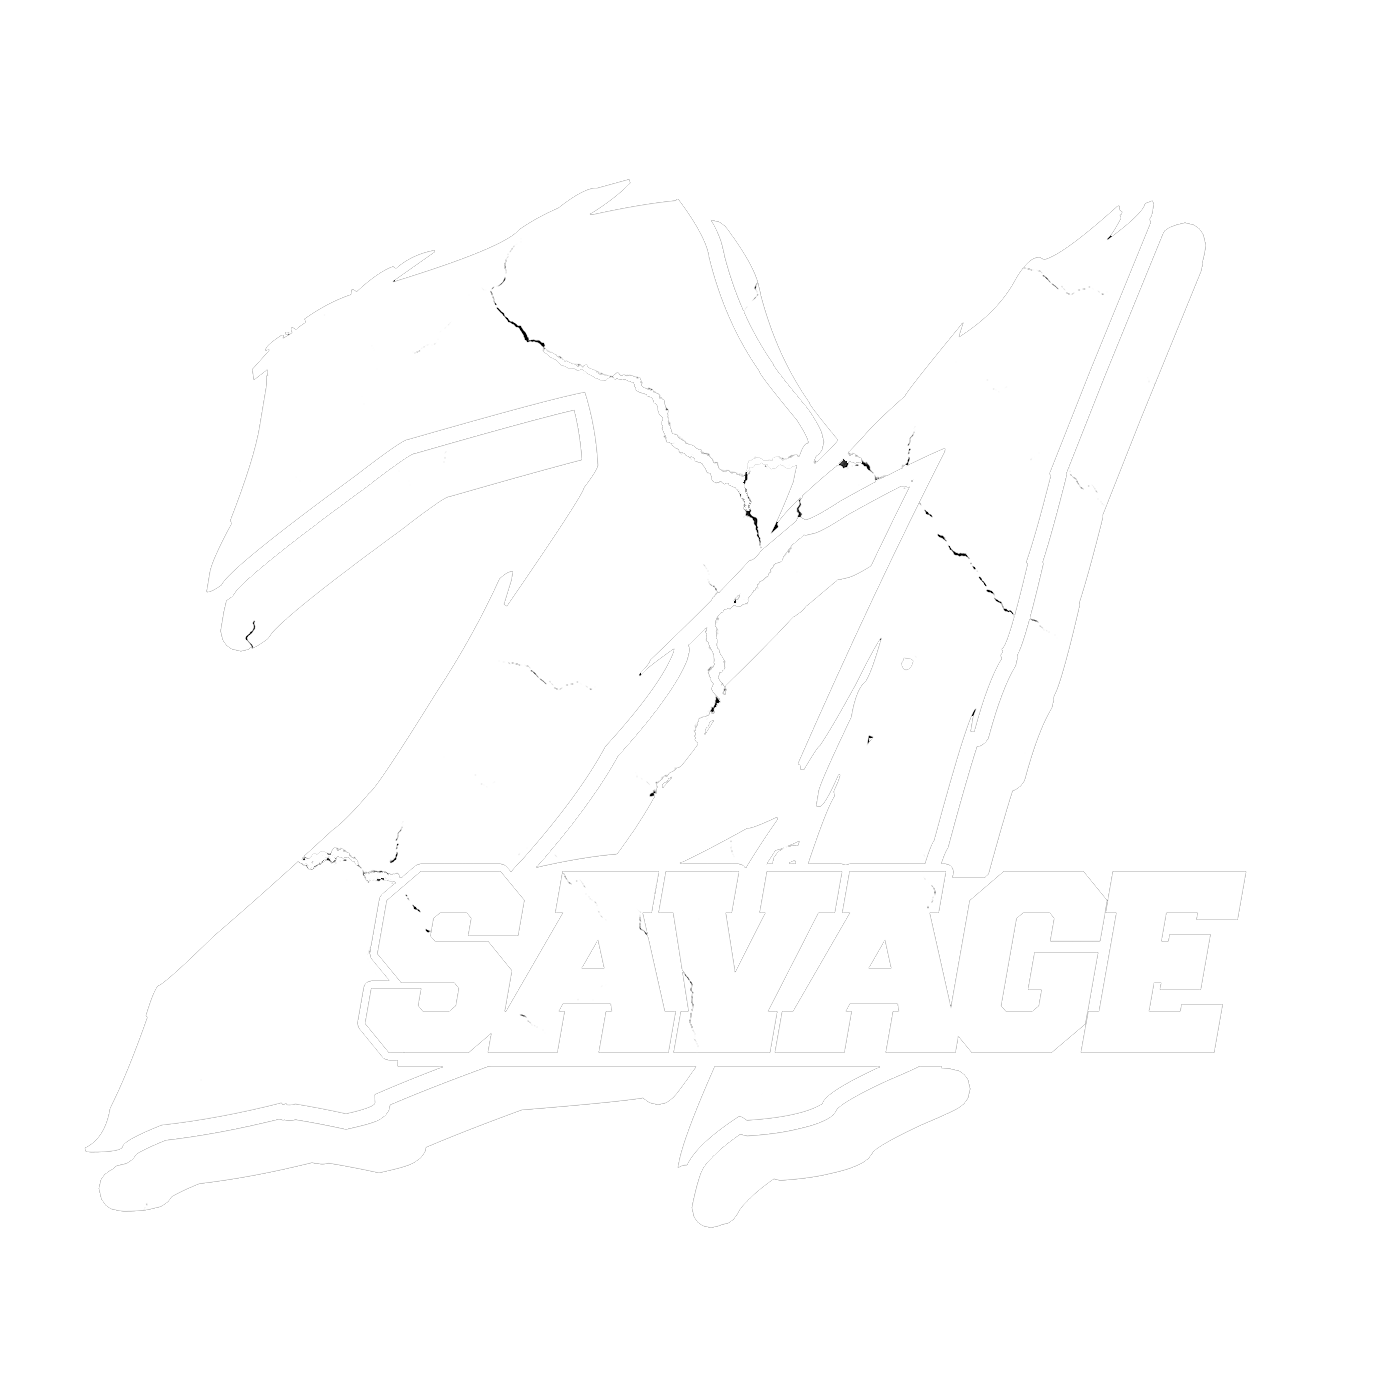 21 Savage Cartoon Wallpapers - Wallpaper Cave